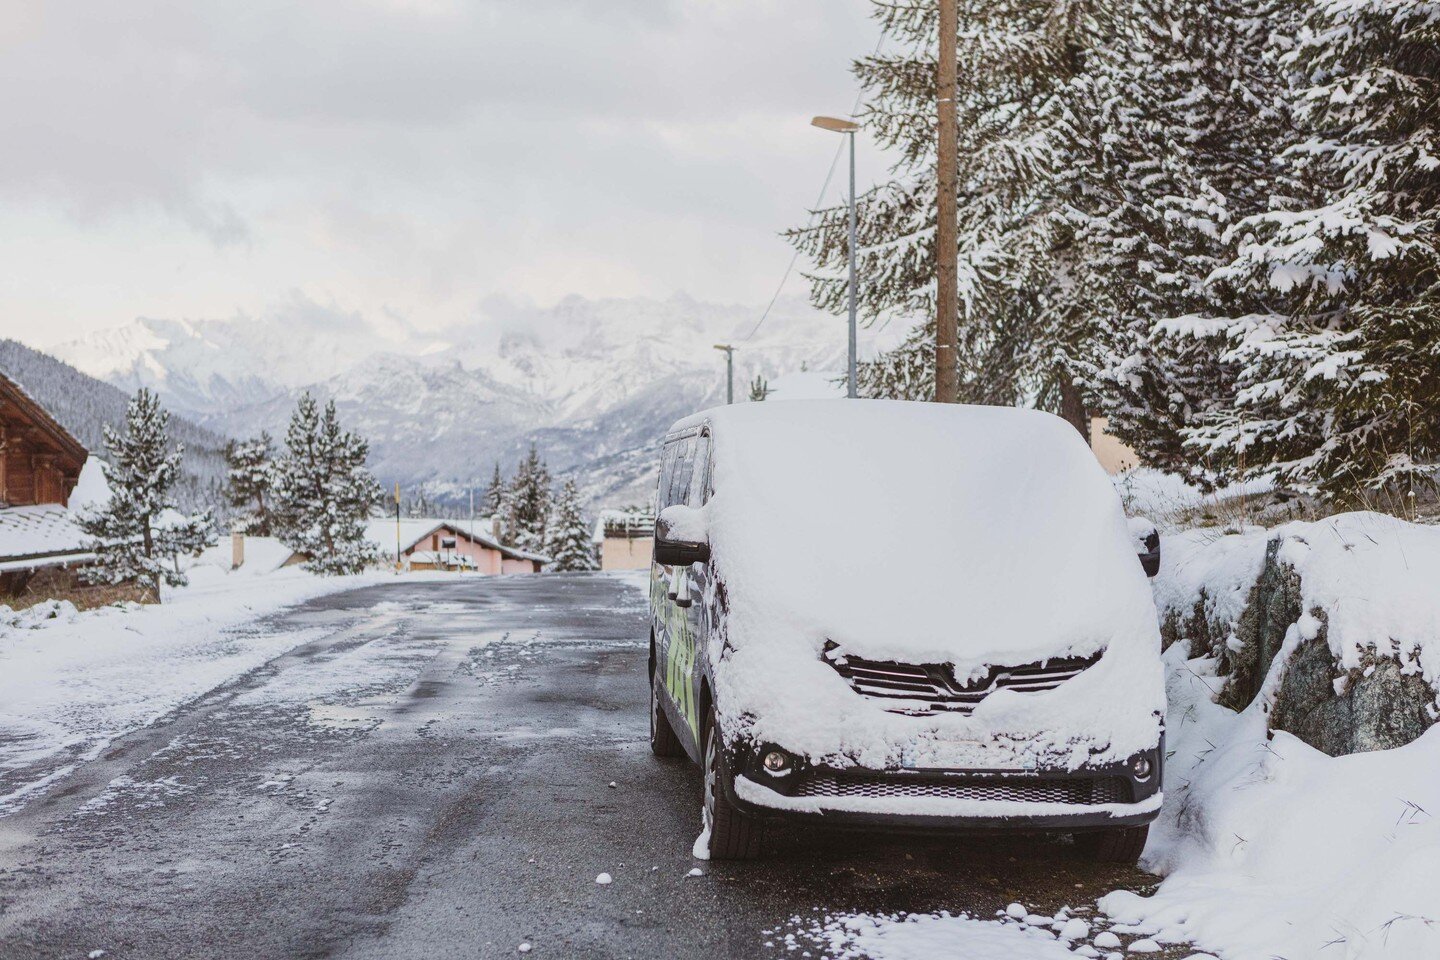 Time to book your transfers. @snow_cab #snowcab #FromAtoSki